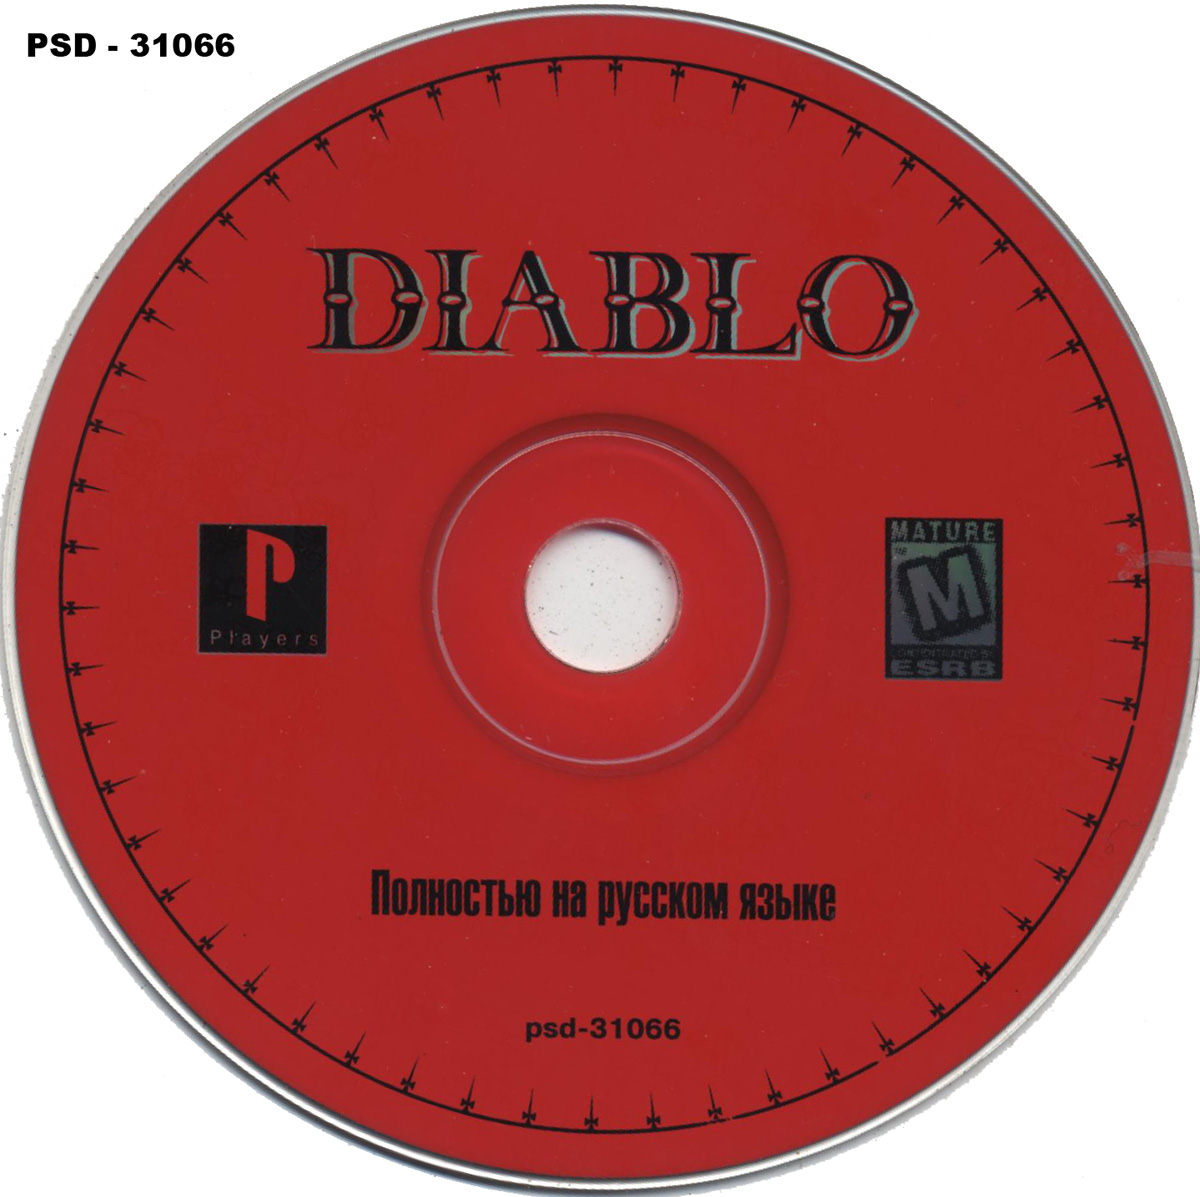 Diablo 2 play disc iso